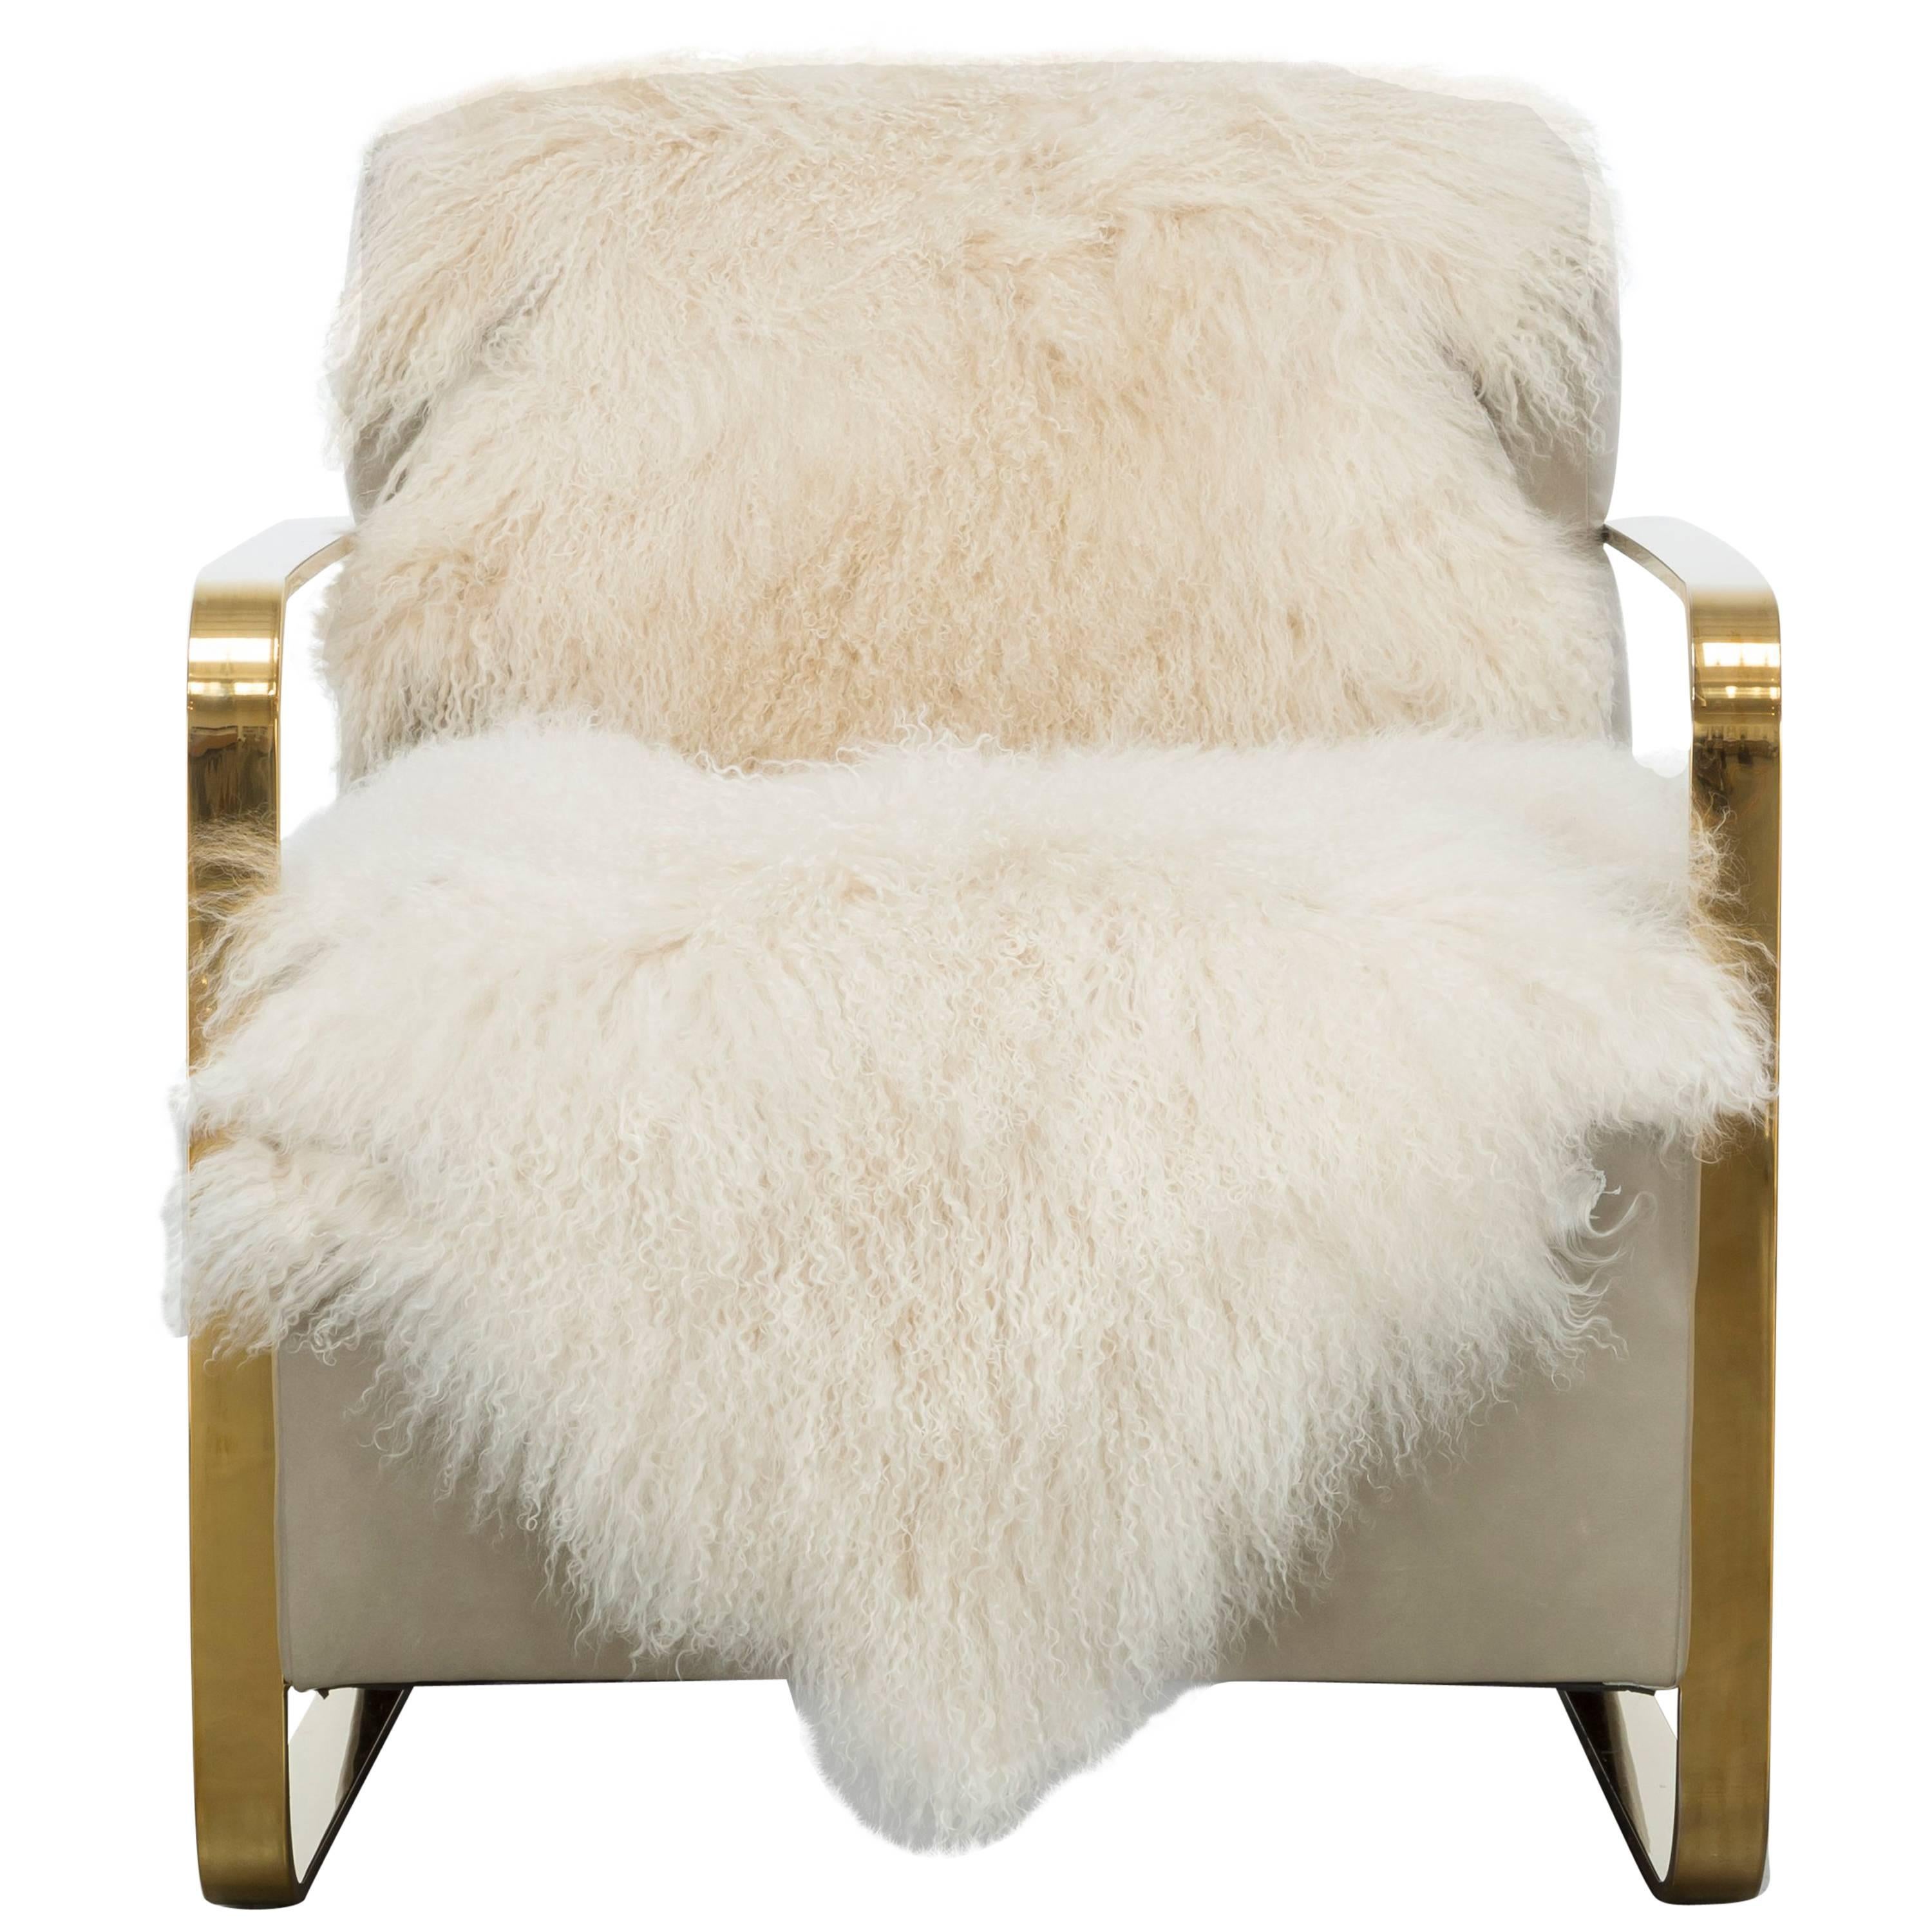 COSETTE CHAIR - Modern Leather Chair with Tibetan Mongolian Lamb Fur